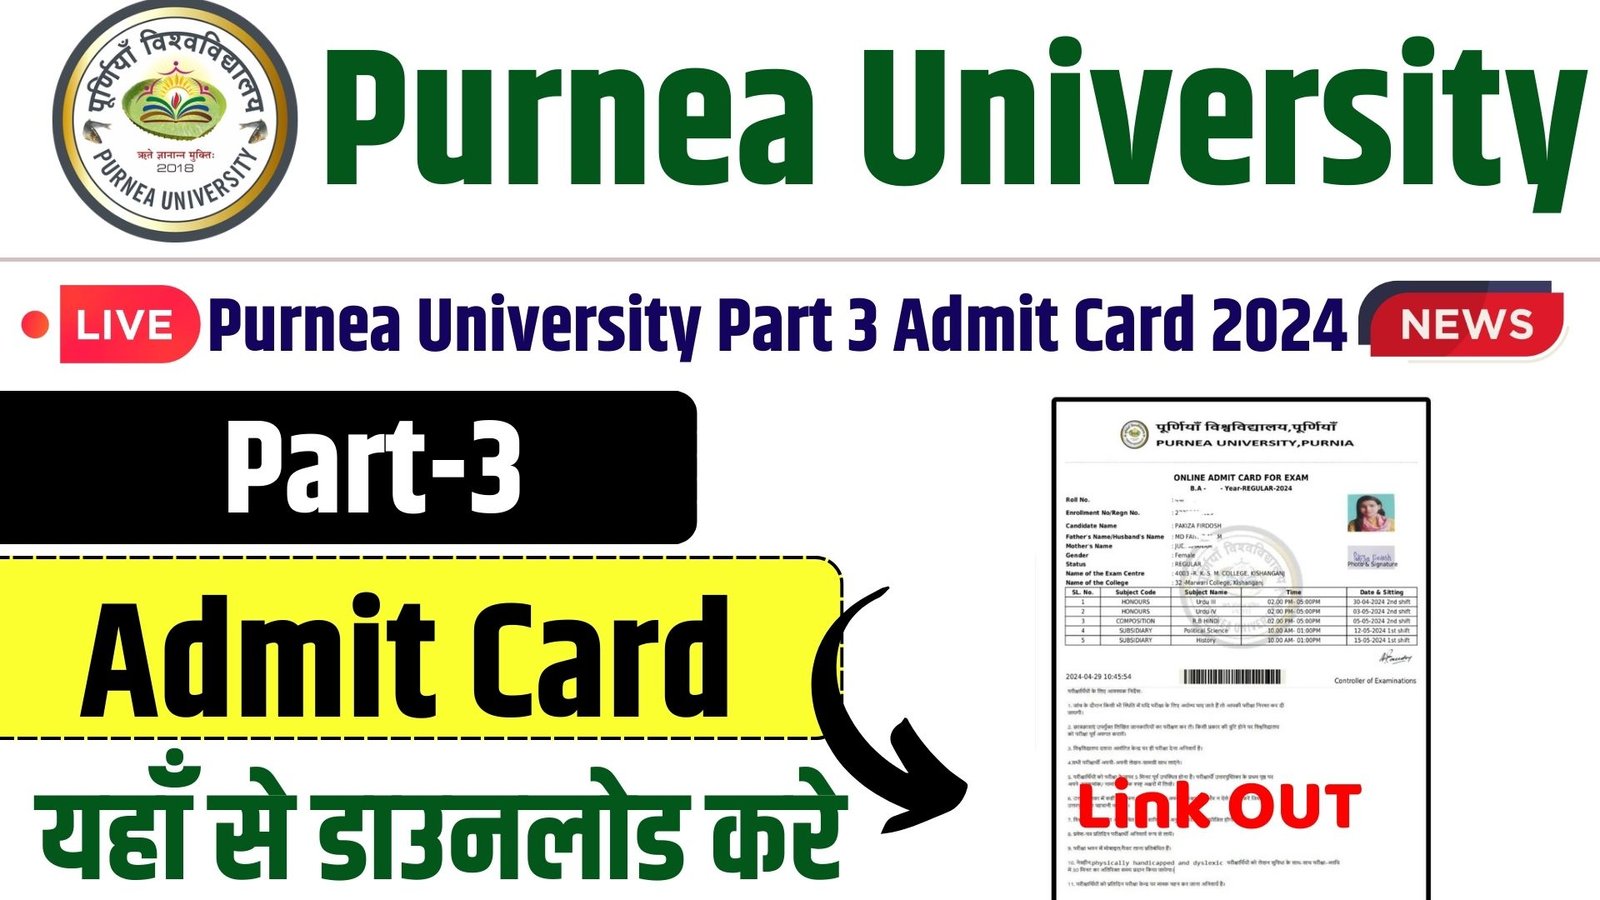 Purnea University Part 3 Admit Card 2024 Download Link